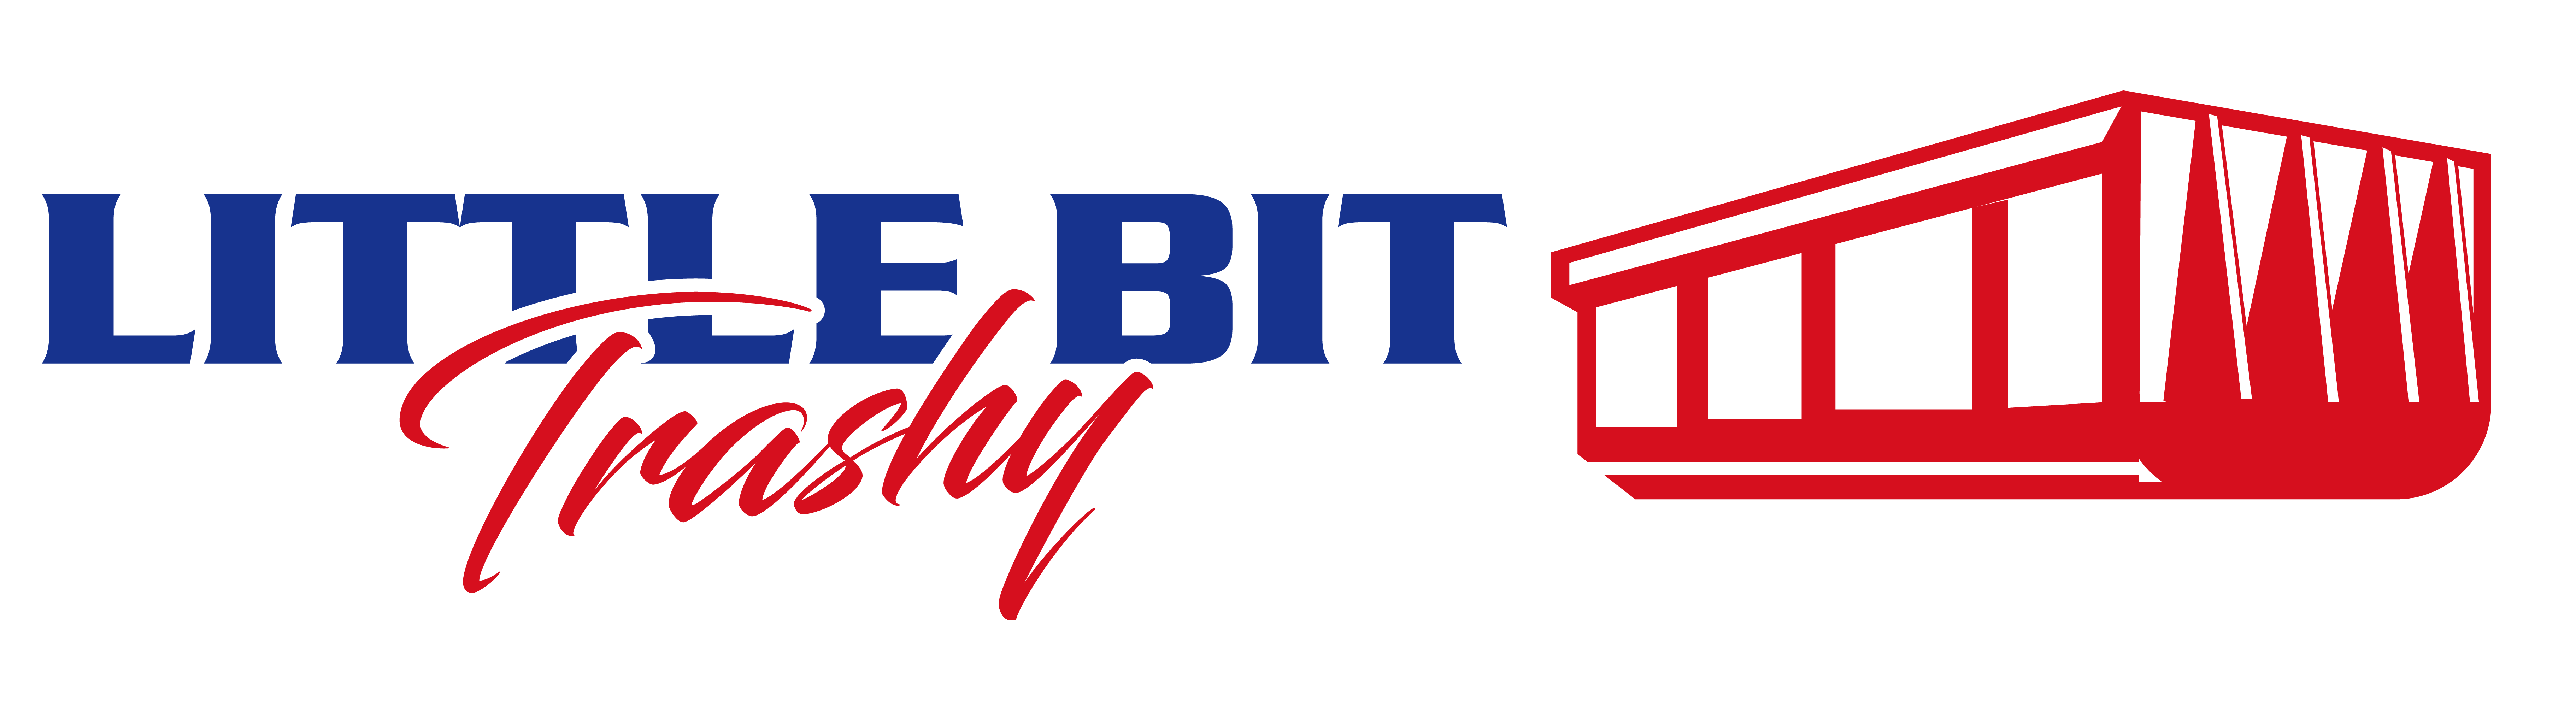 little-bit-trashy-logo.png